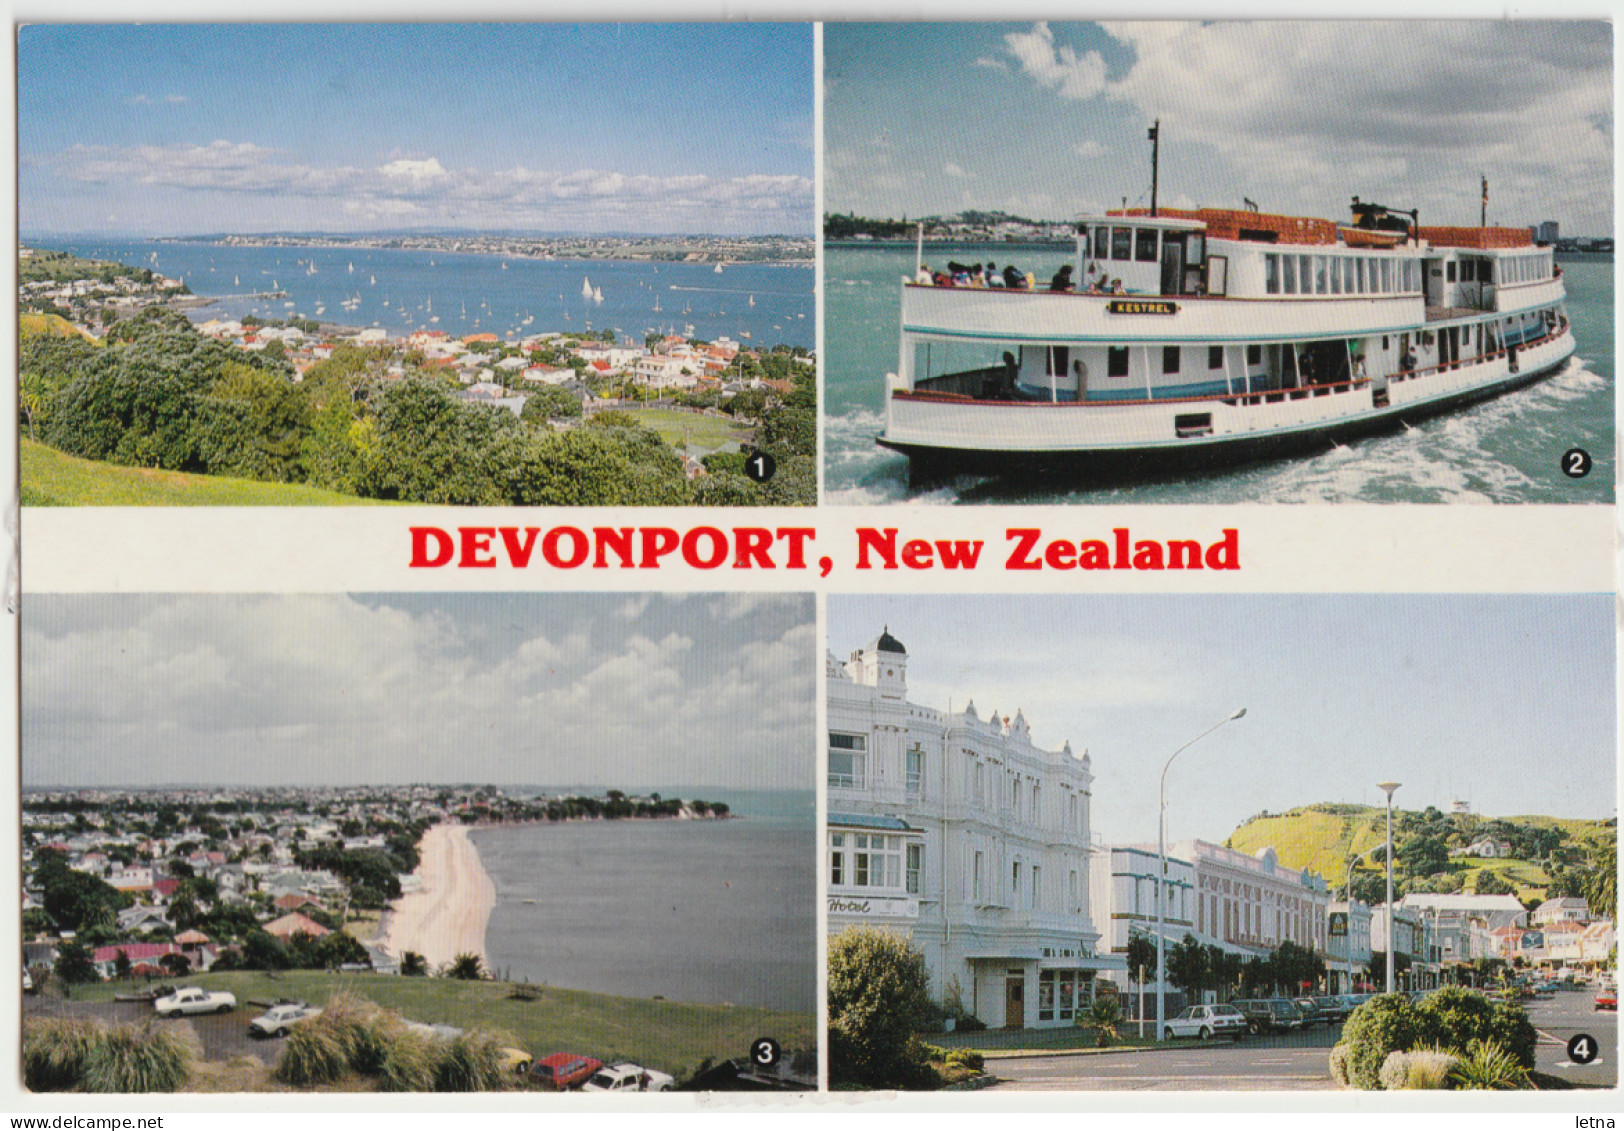 NEW ZEALAND NZ Ferry Scenic Multiviews DEVONPORT AUCKLAND Tiki P3179 Postcard C1990s - Neuseeland